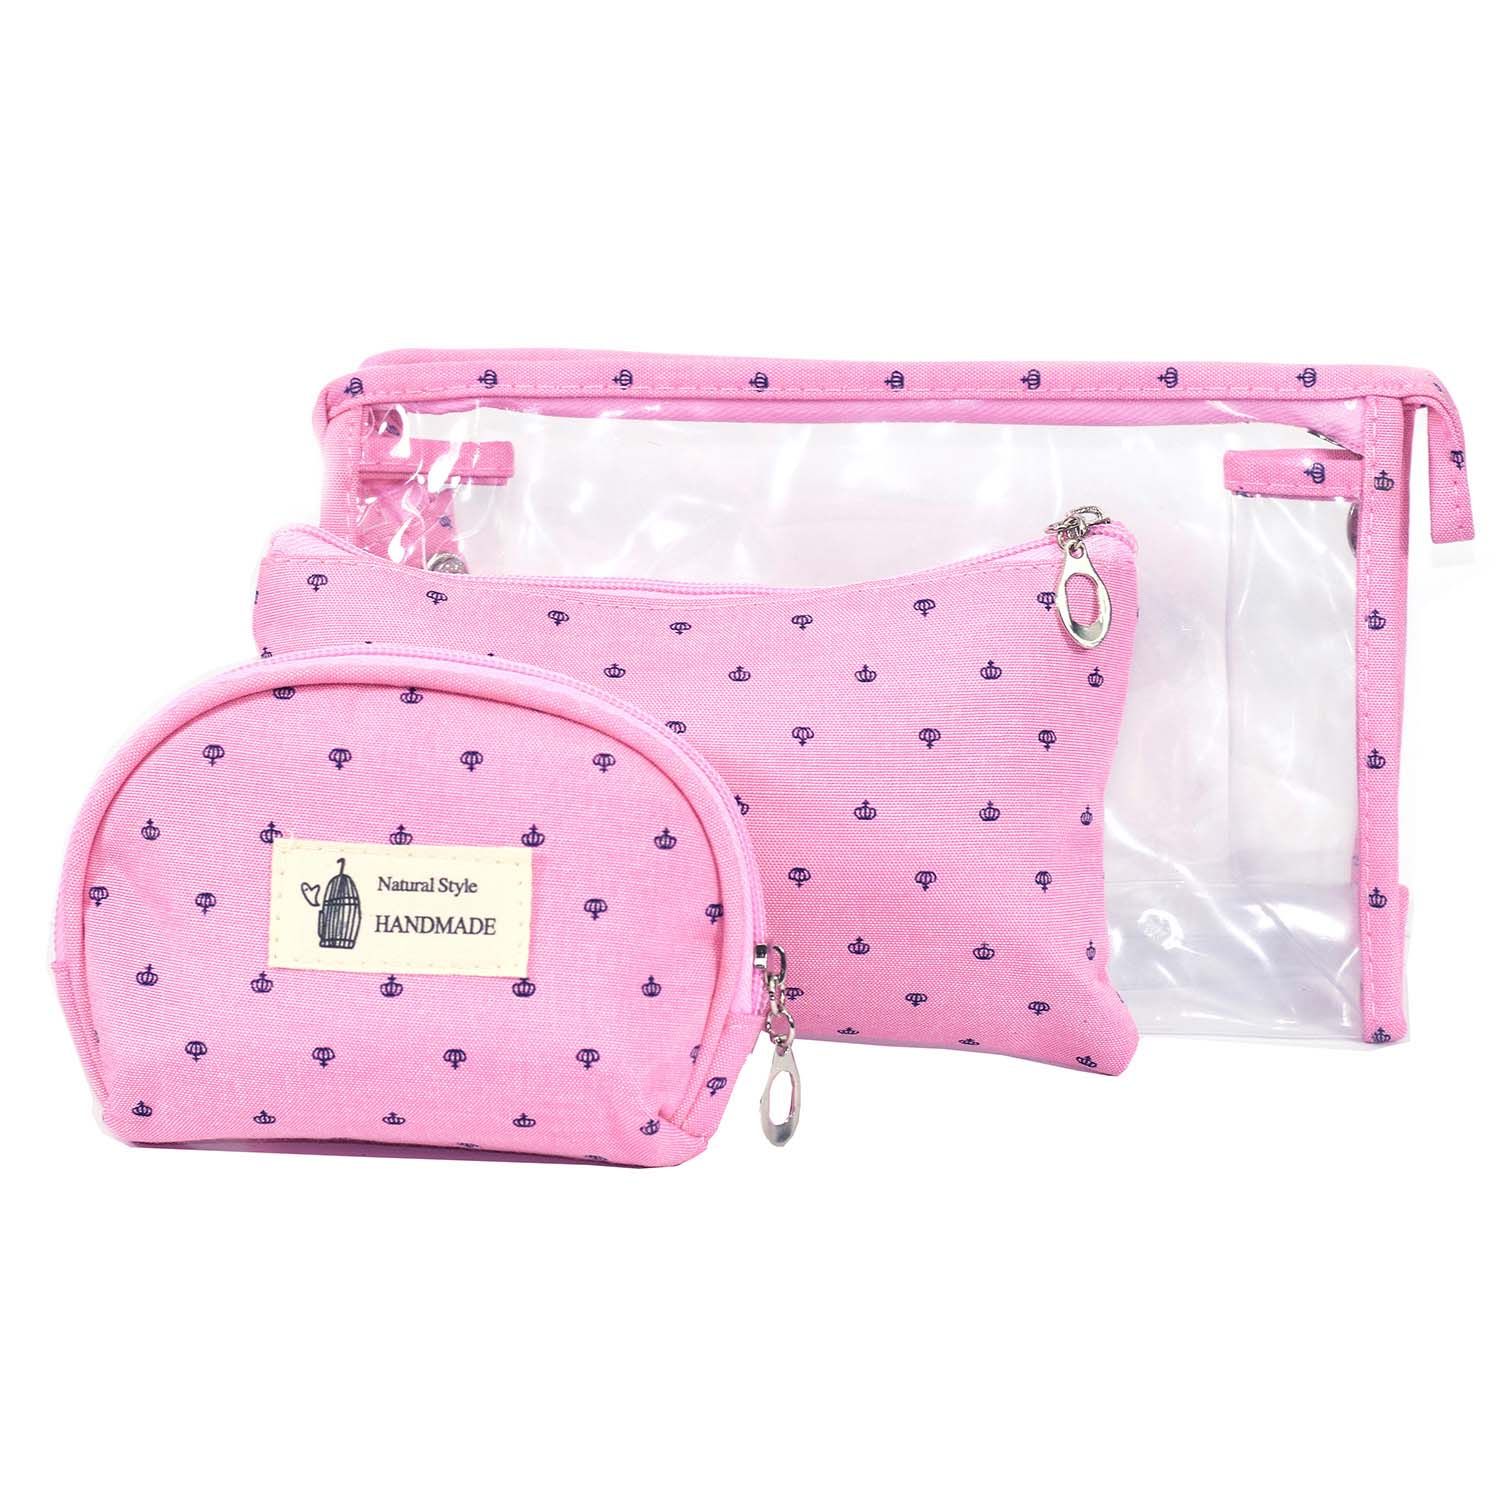 Buy Bonjour Paris Coat Me 3 pc Women's Multi Purpose Makeup Bag / Cosmetic Pouch - Baby Pink - Purplle